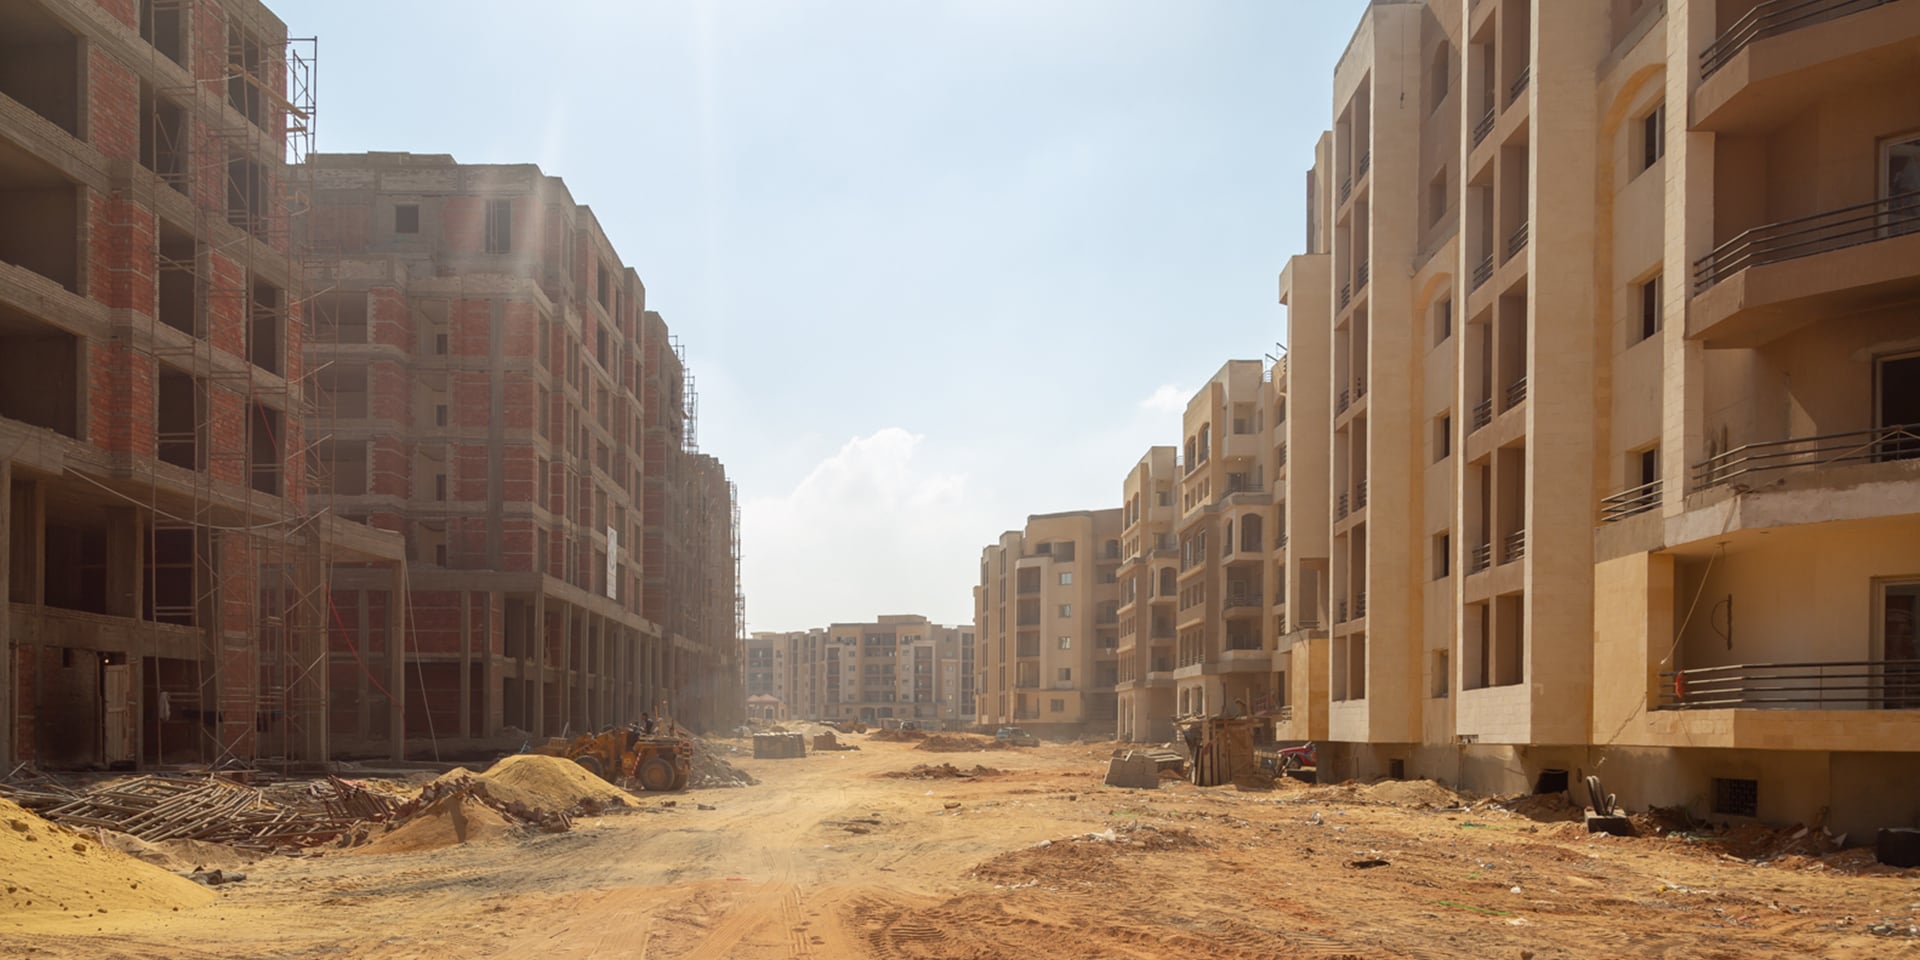 AlMaqsad Residencesconstructions